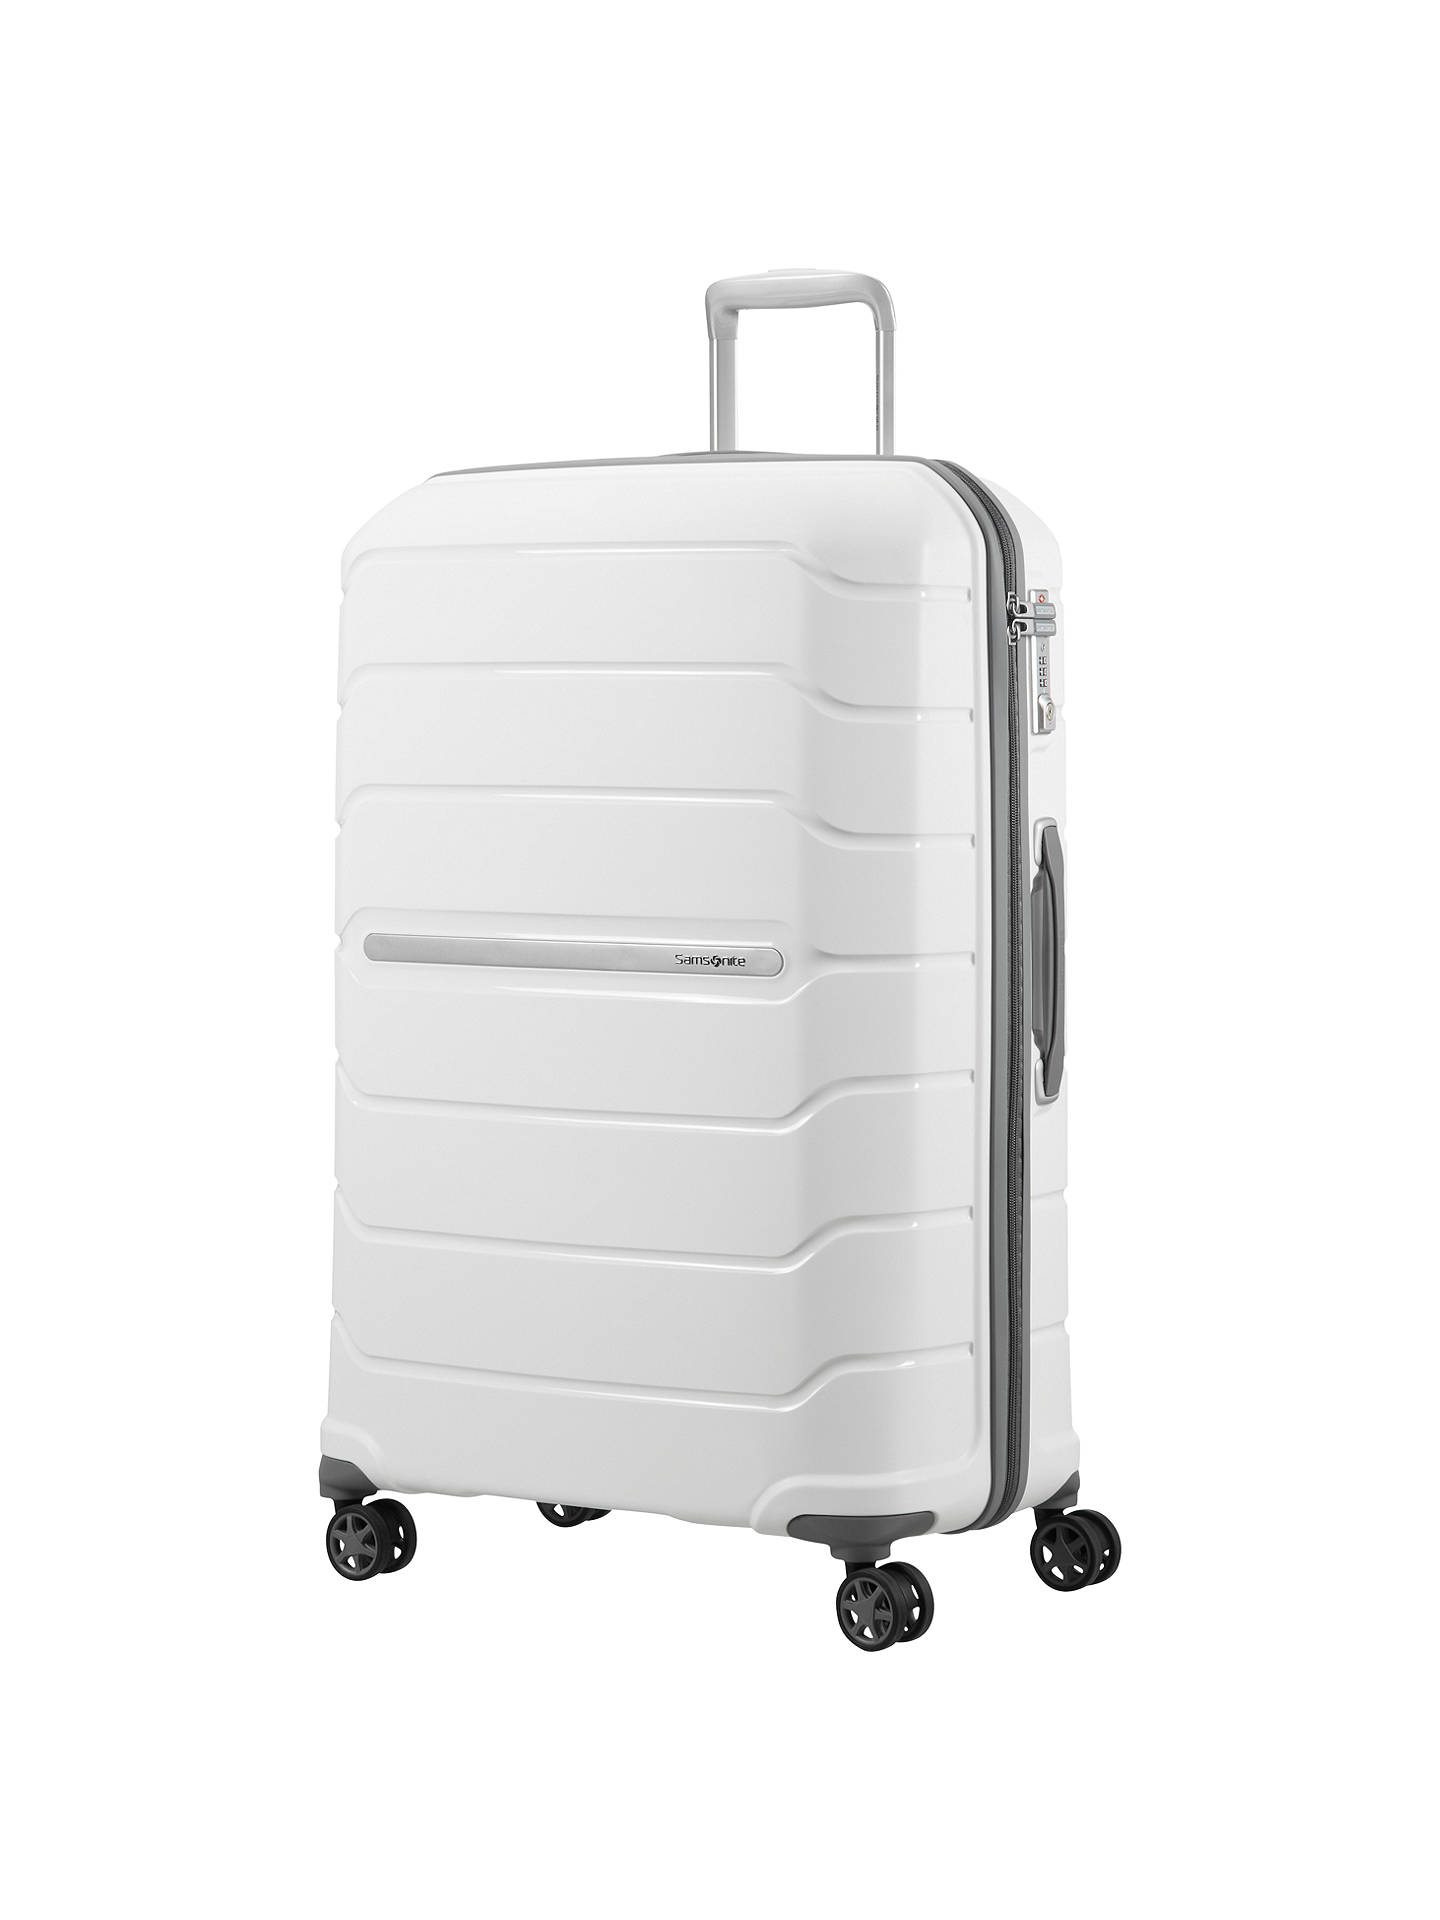 Samsonite Flux Spinner 4-Wheel 75cm Large Suitcase, White at John Lewis ...